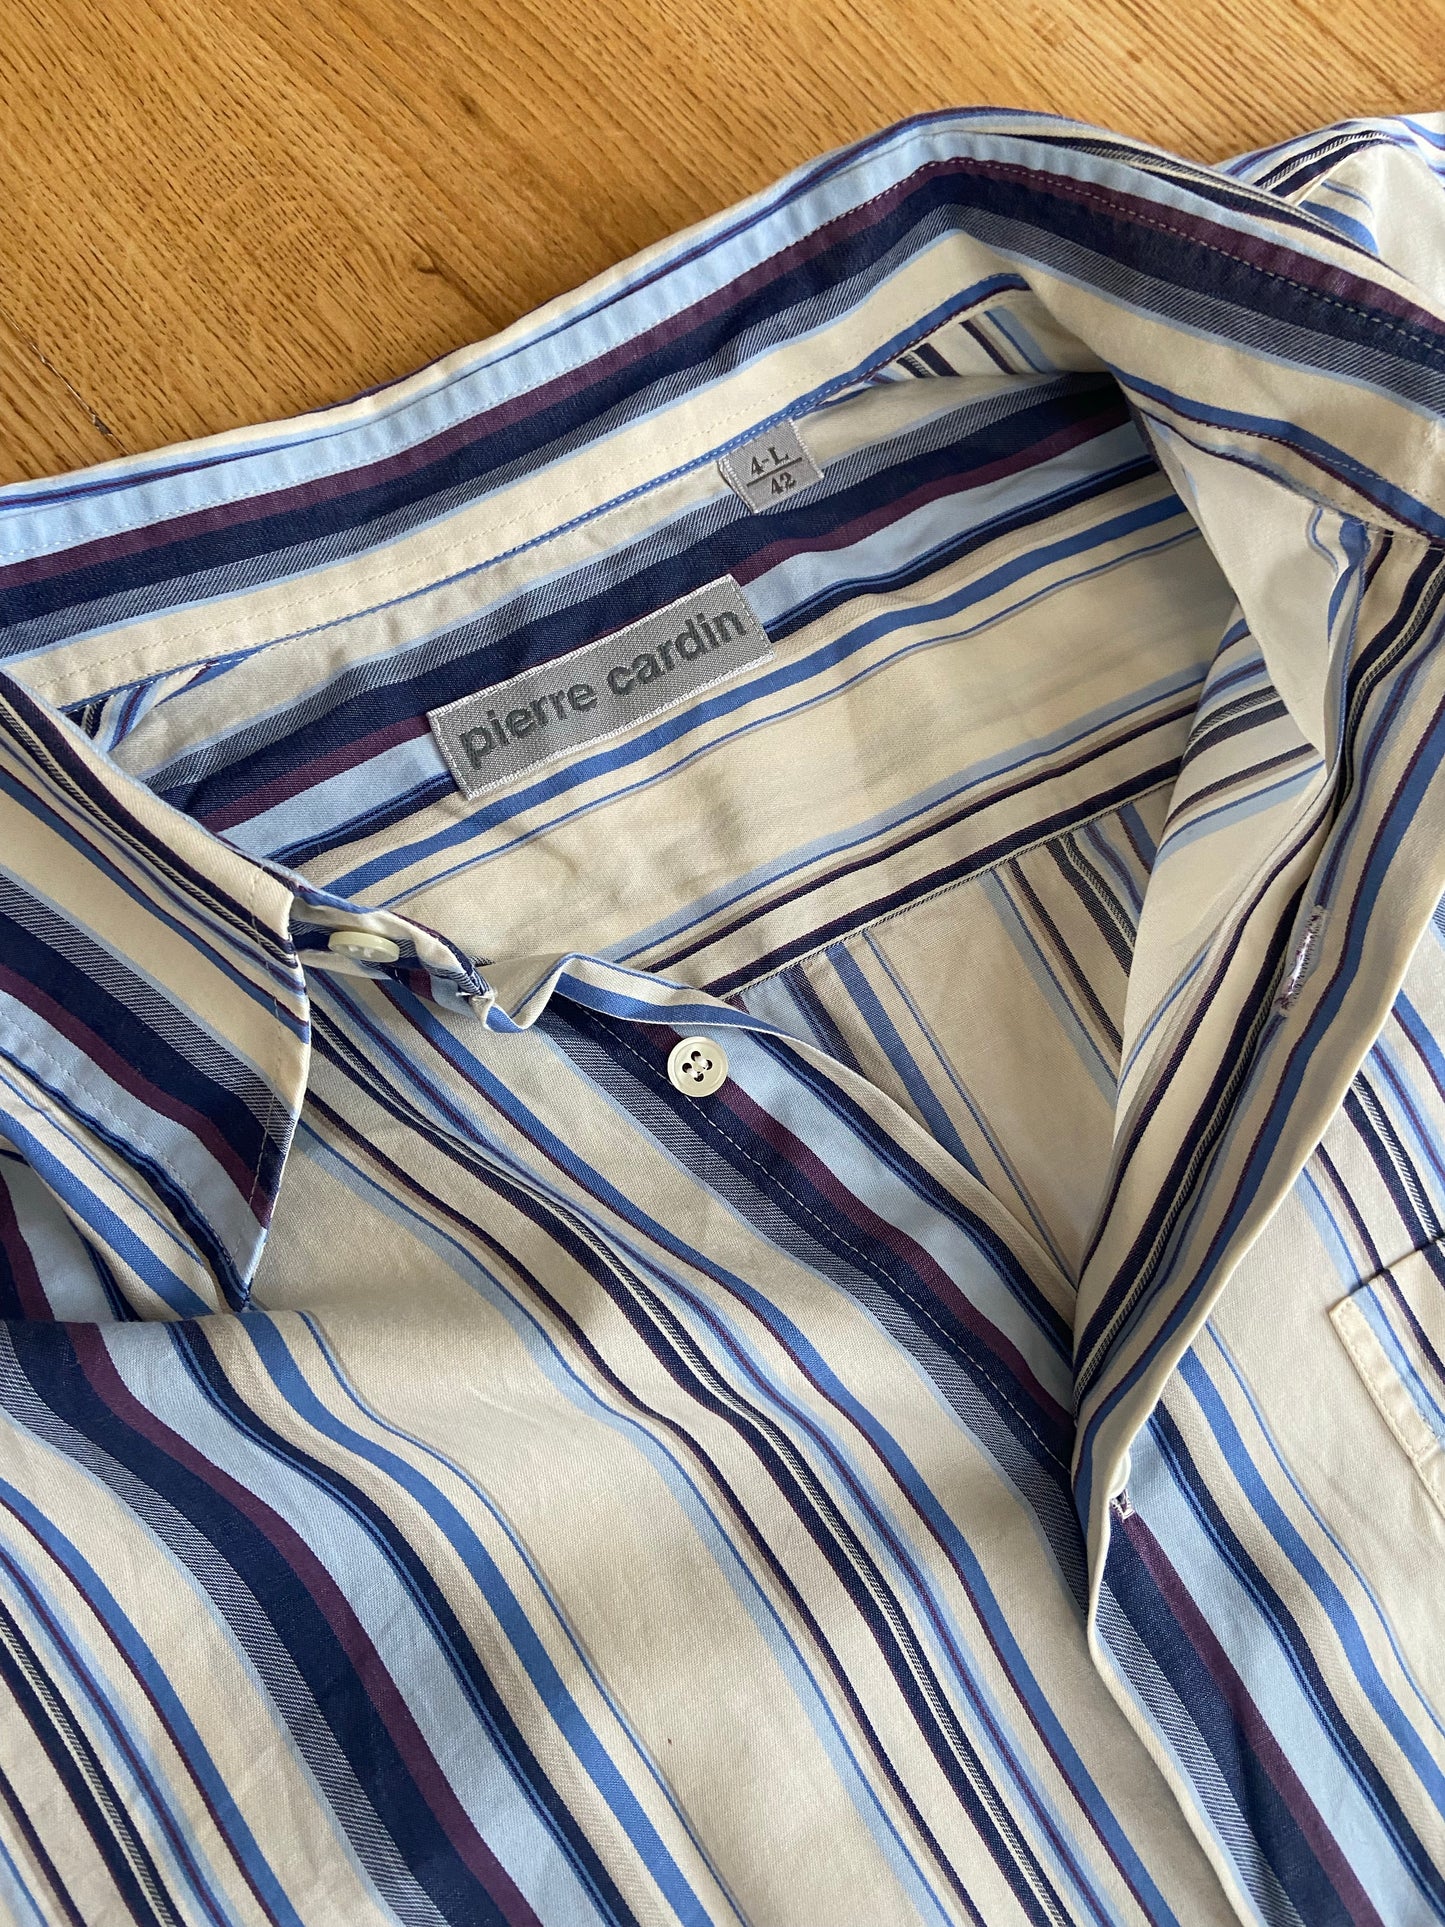 Pierre Cardin striped shirt